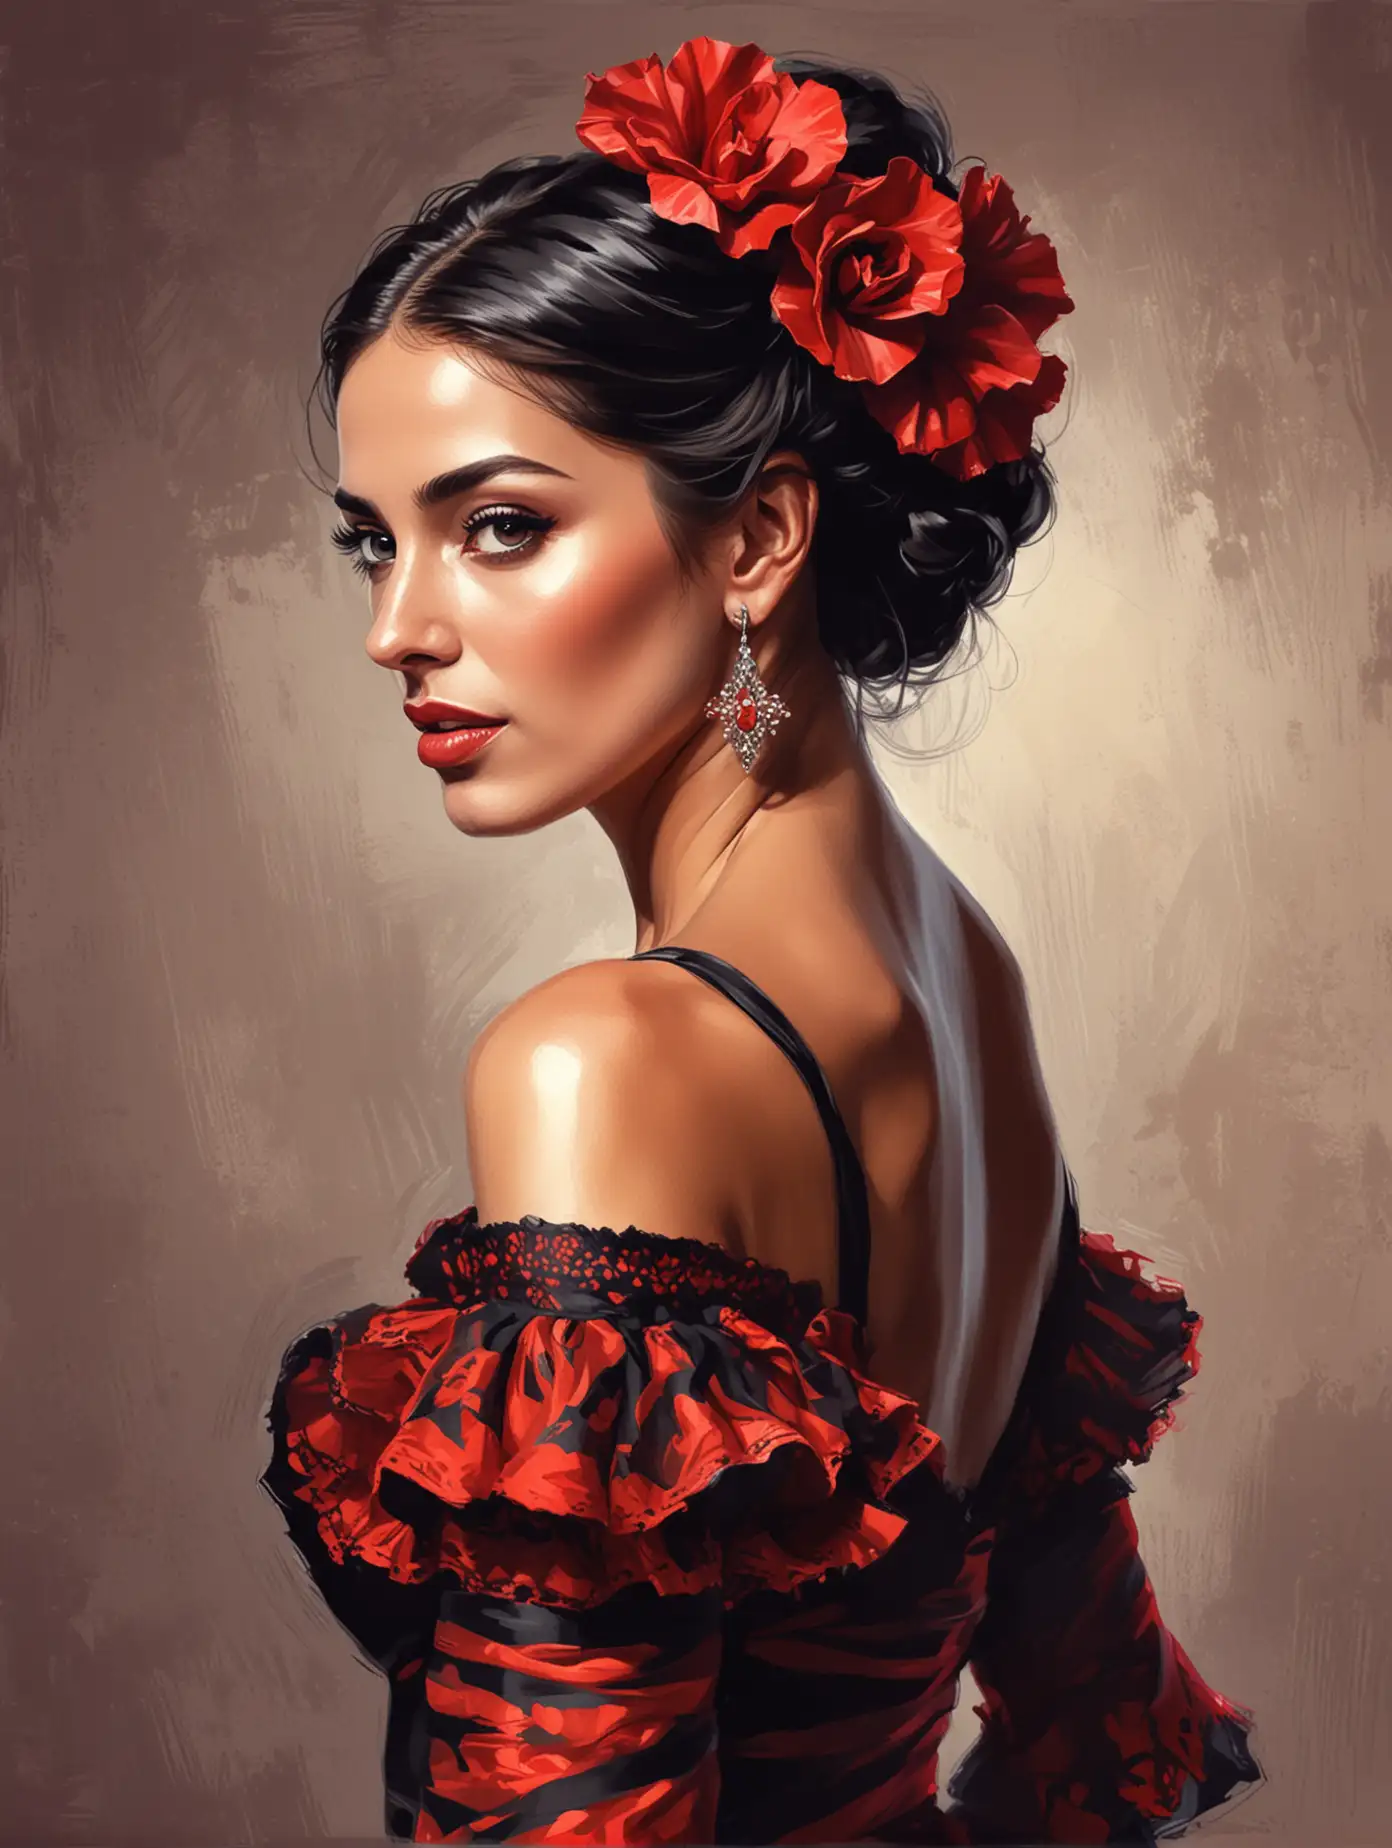 Elegant Flamenco Dancer Portrait with Graceful Movement